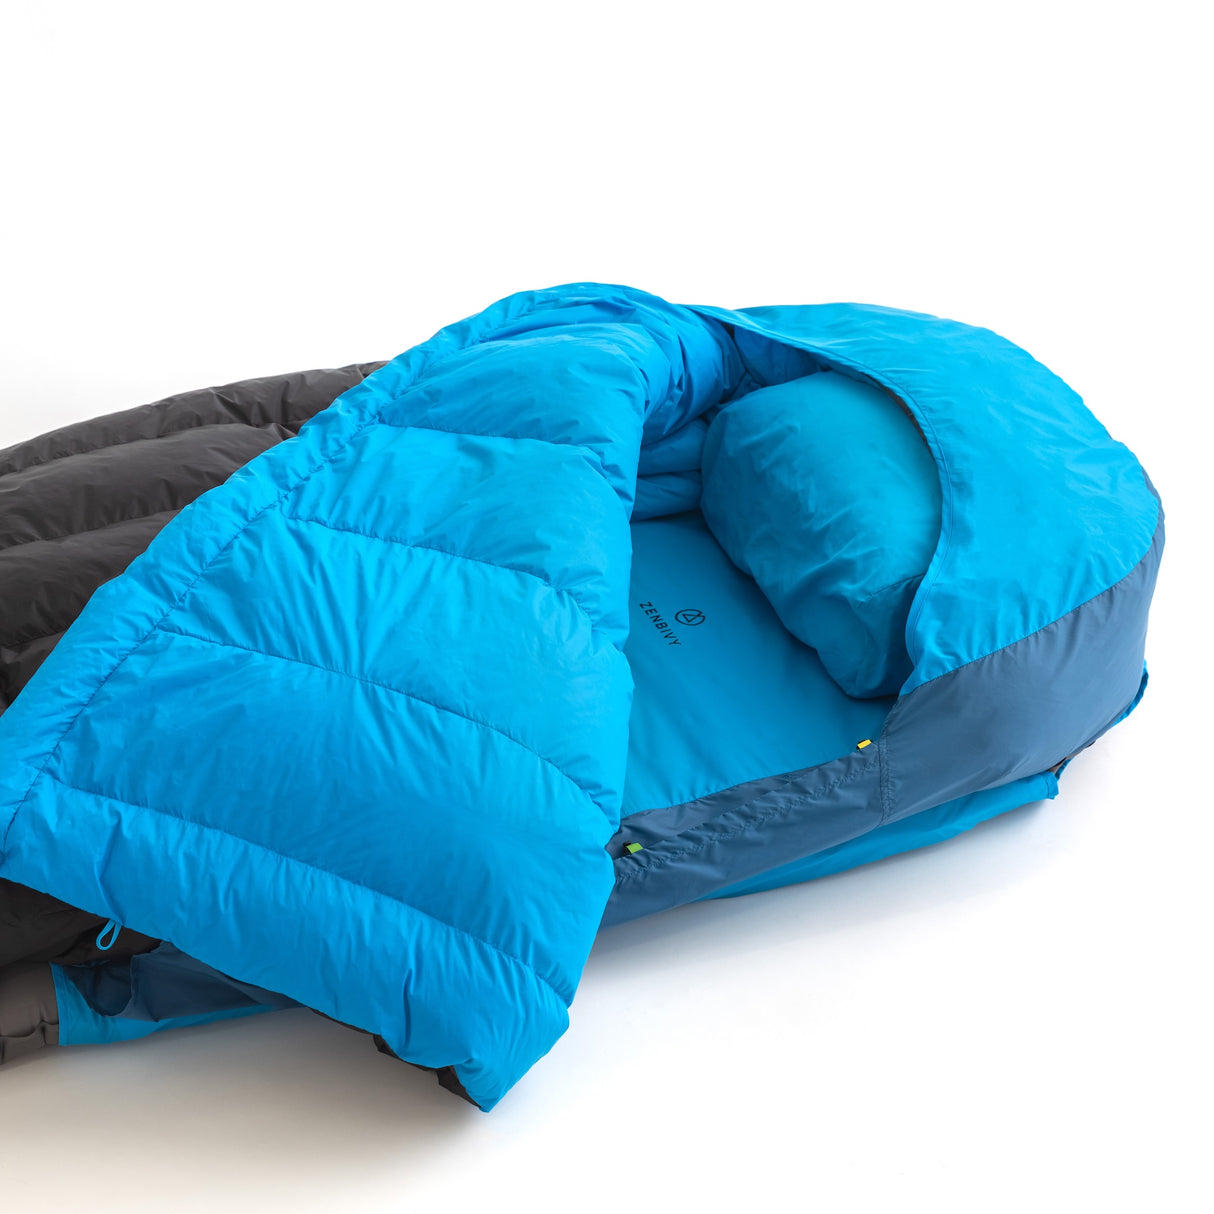 Draft-Free Backpacking Sleep System